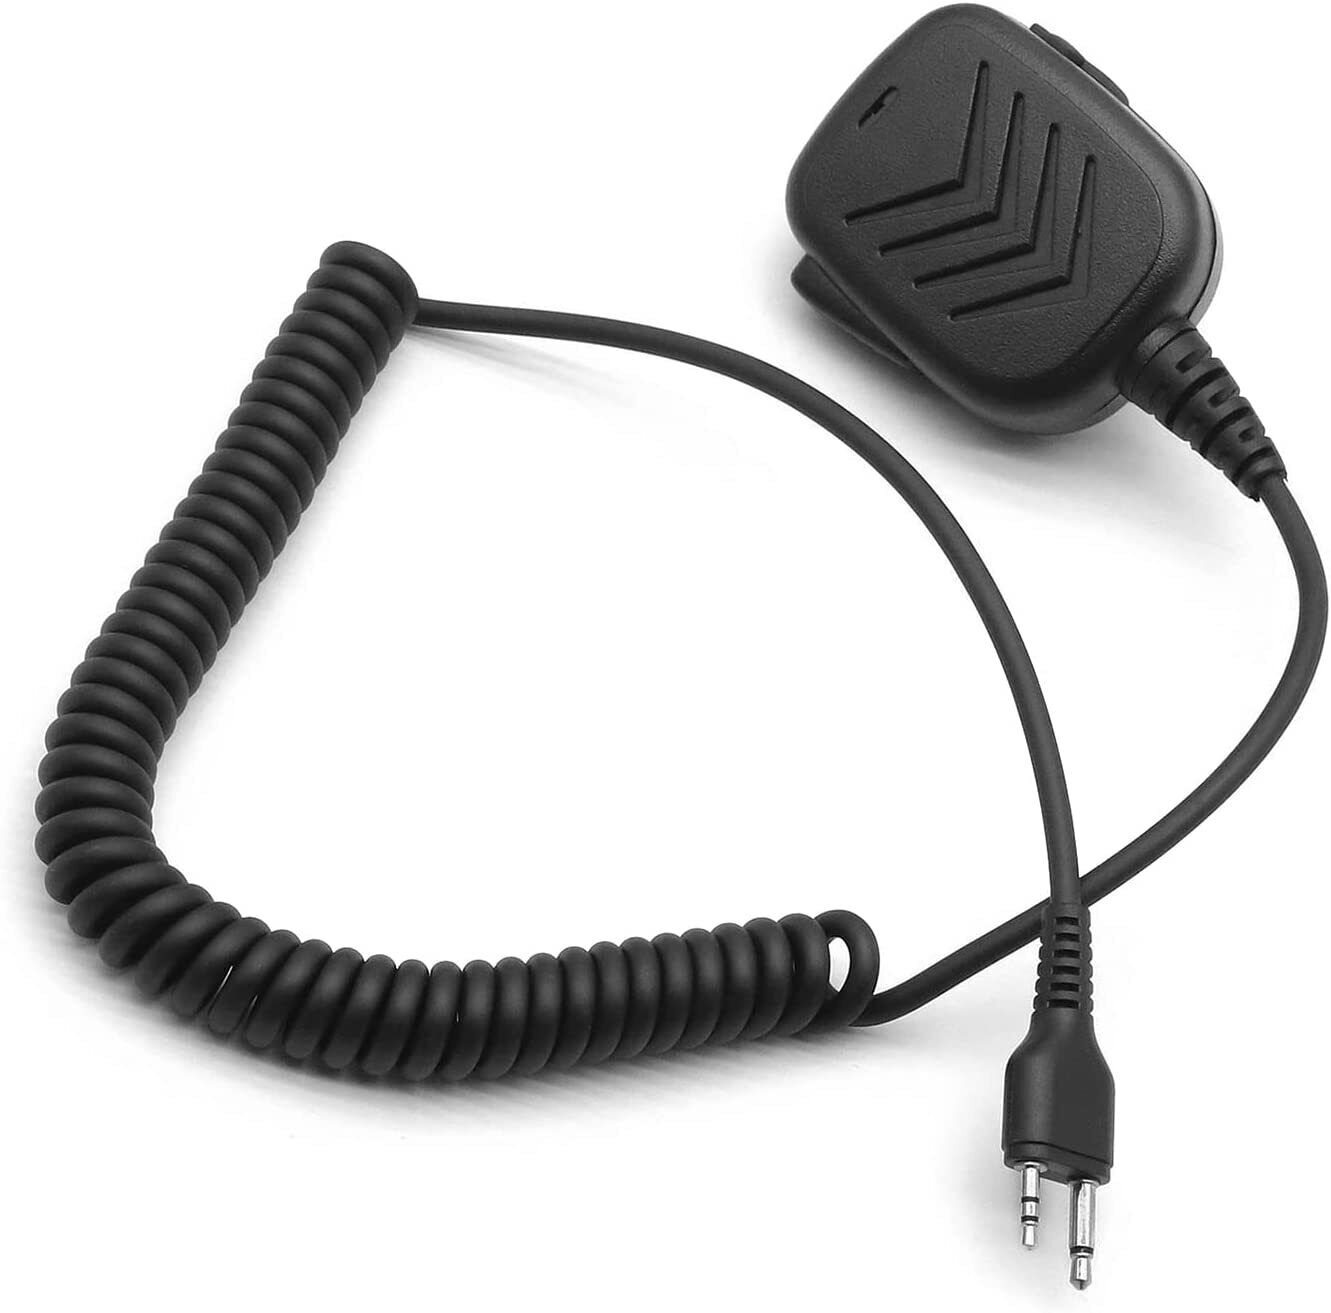 Radio Handheld Speaker Microphone Replacement for Midland T77VP5 T290VP5 T295VP4